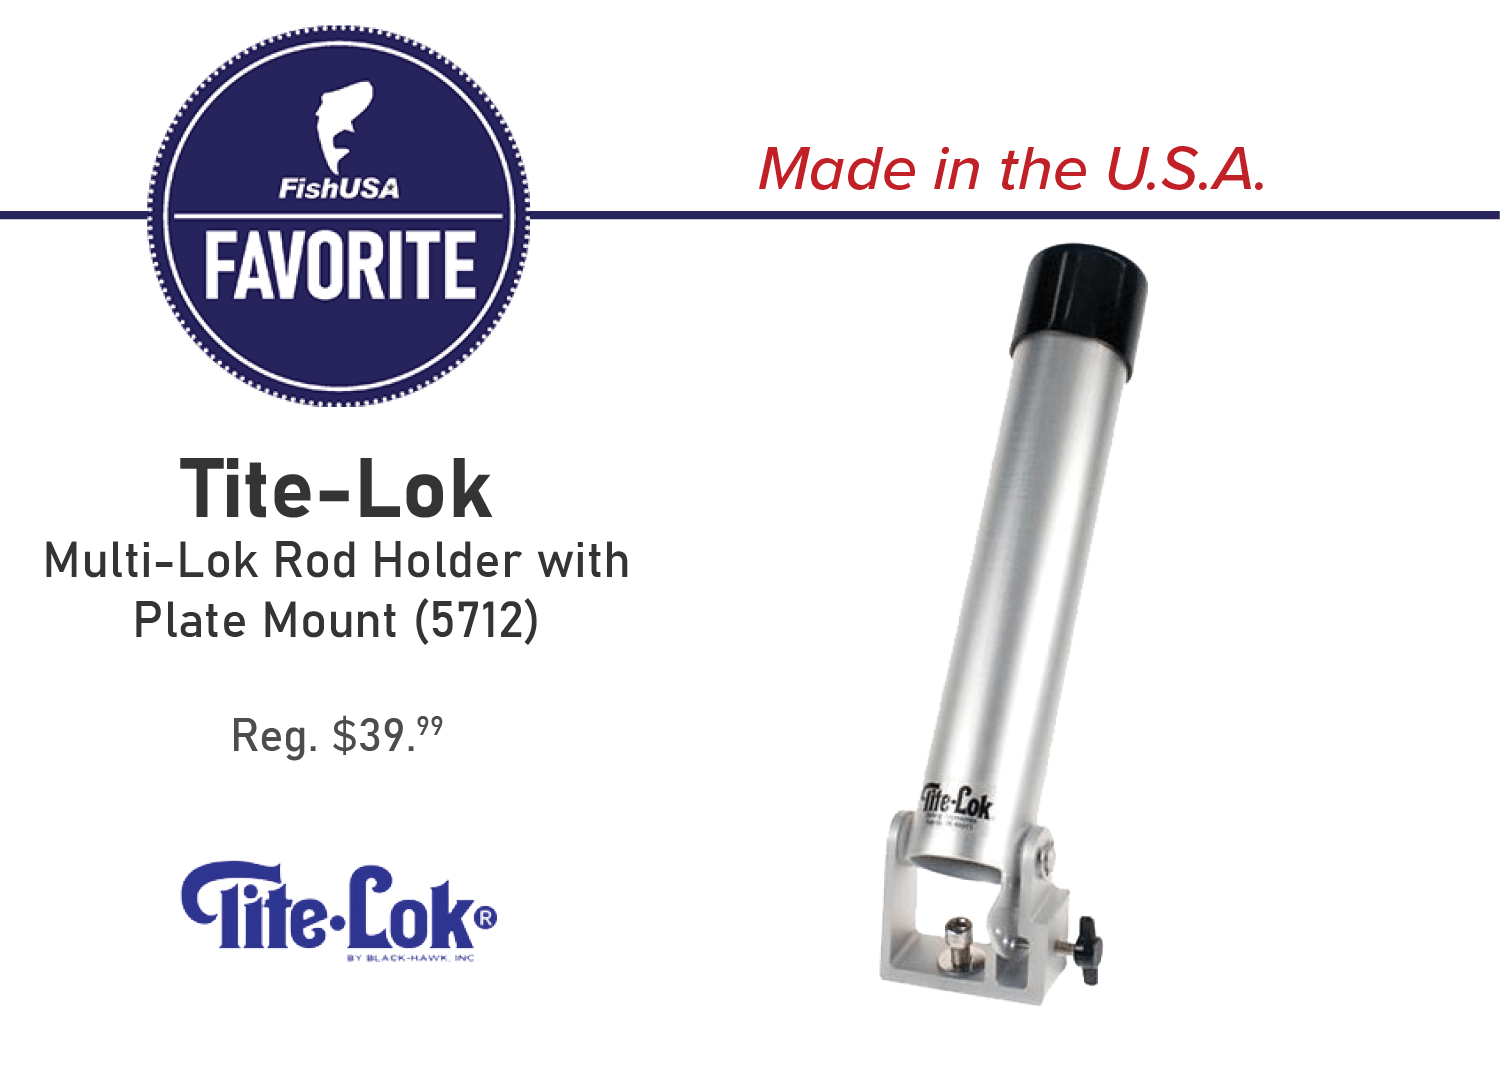 Tite-Lok Multi-Lok Rod Holder with Plate Mount (5712)